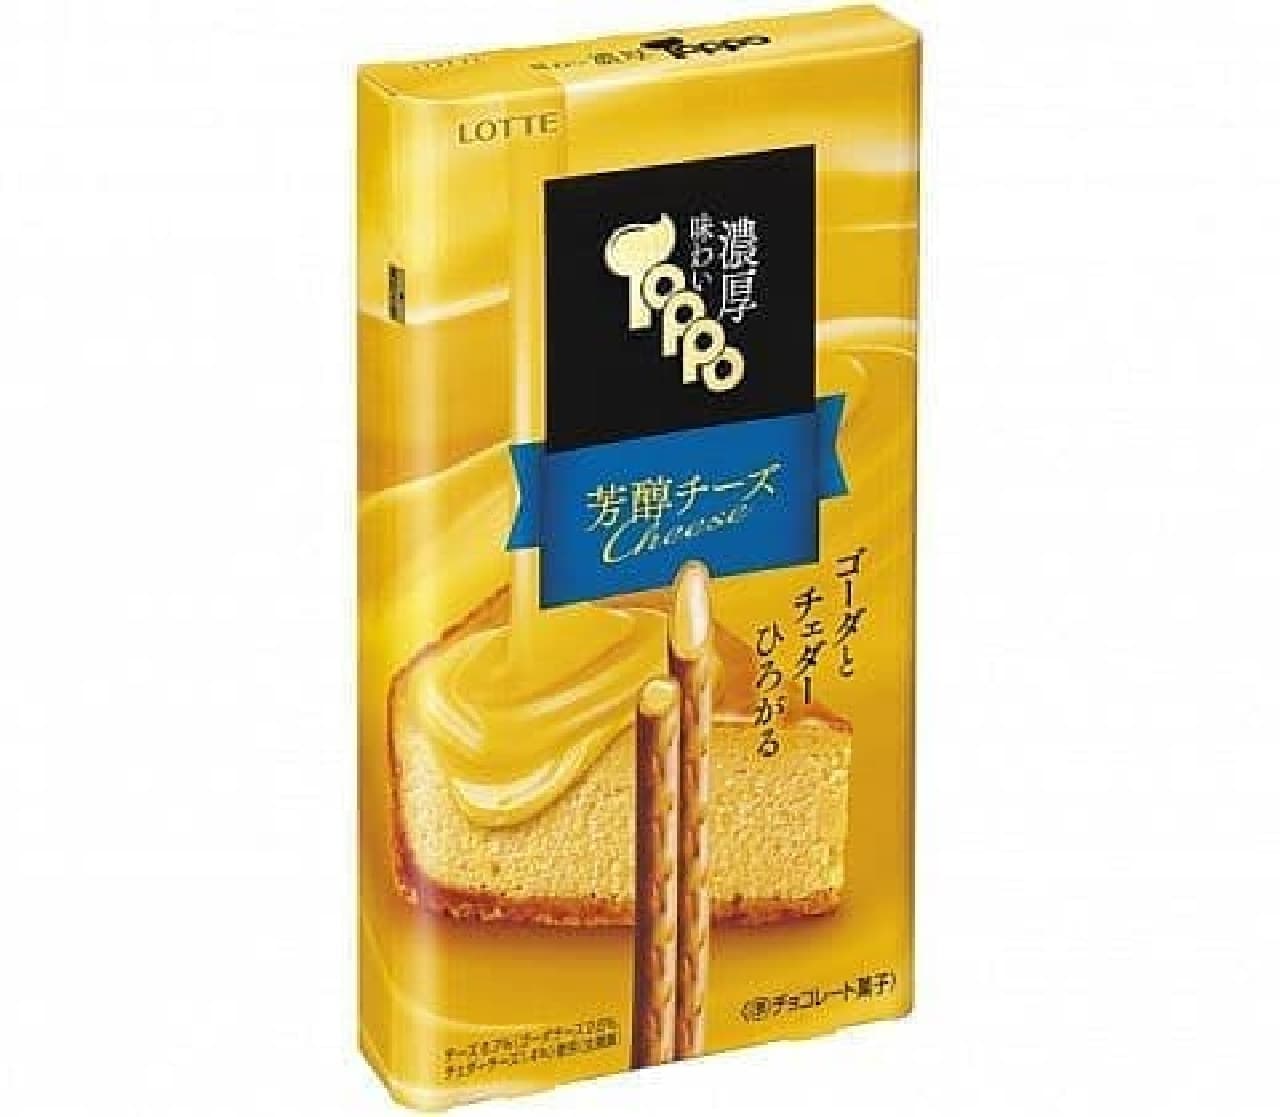 Lotte "Tasteful rich toppo [rich cheese]"